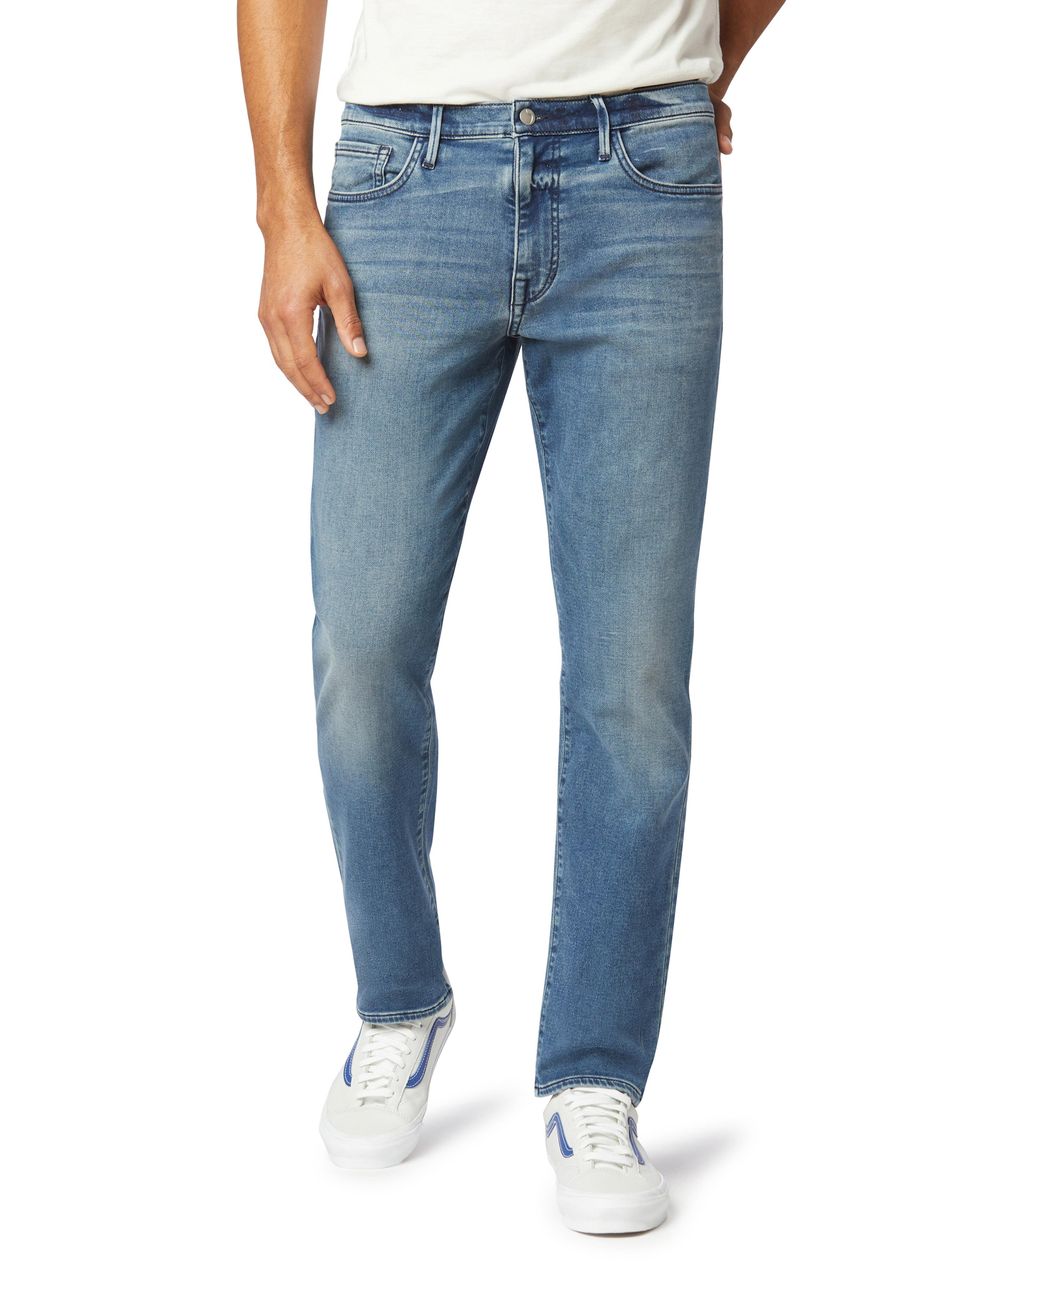 Joe's Denim The Asher Slim Fit Jeans in Blue for Men - Lyst